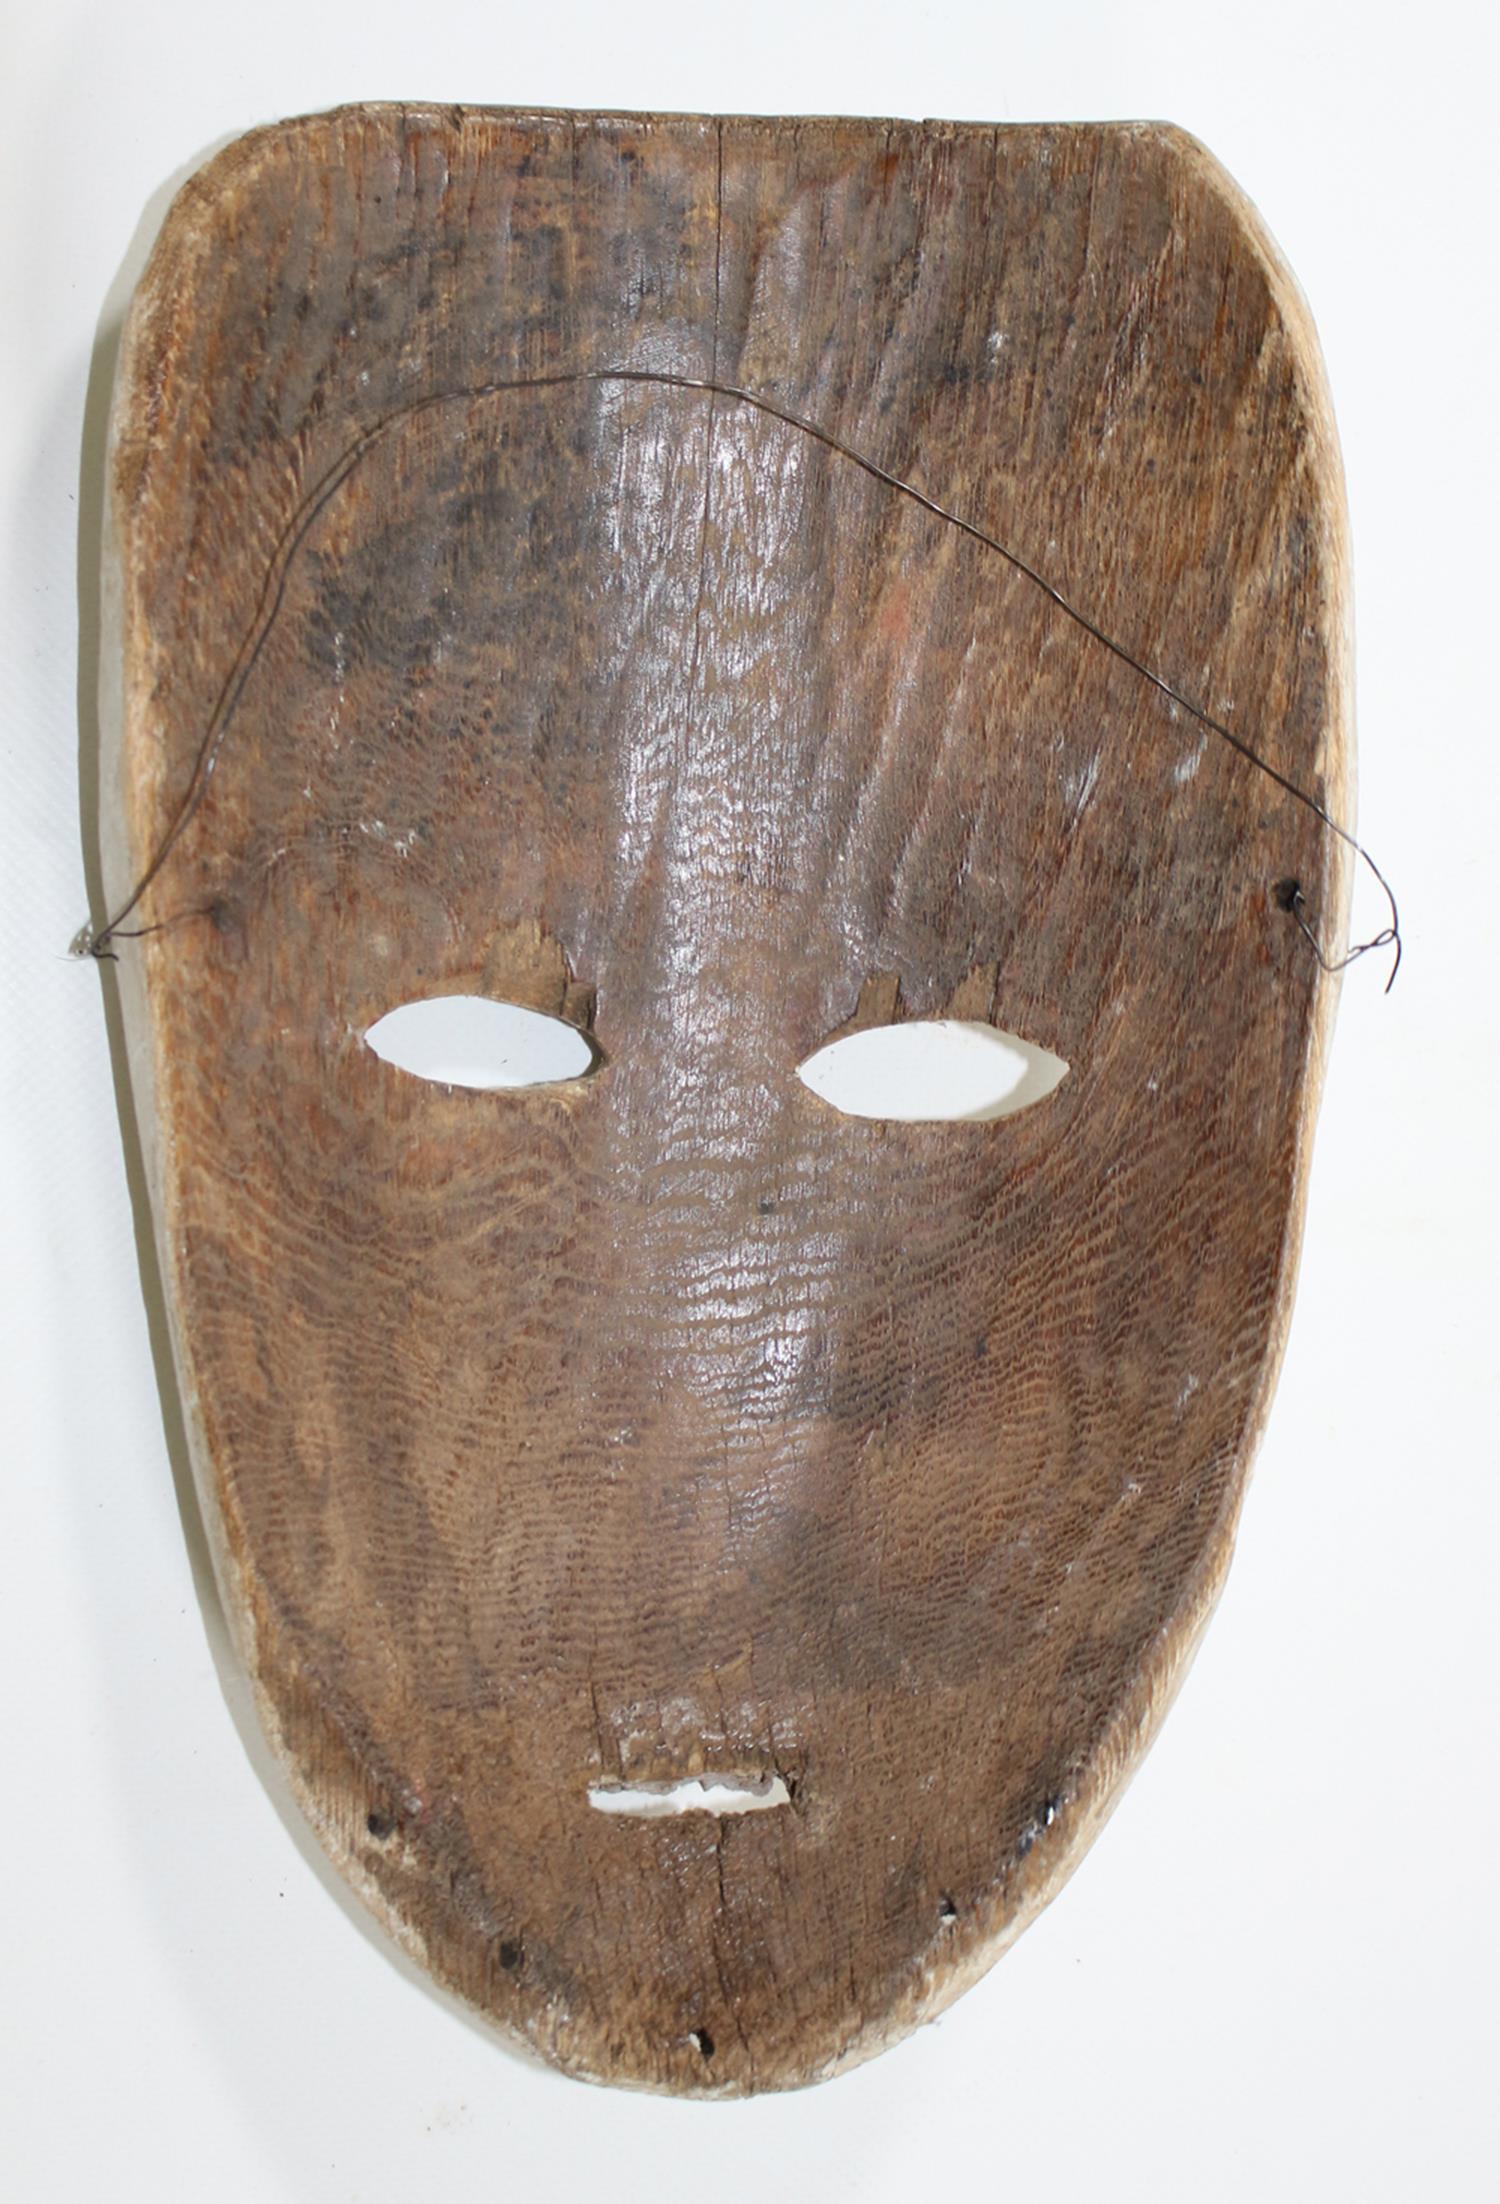 Ituri Maske D.R.Kongo. | Bild Nr.3